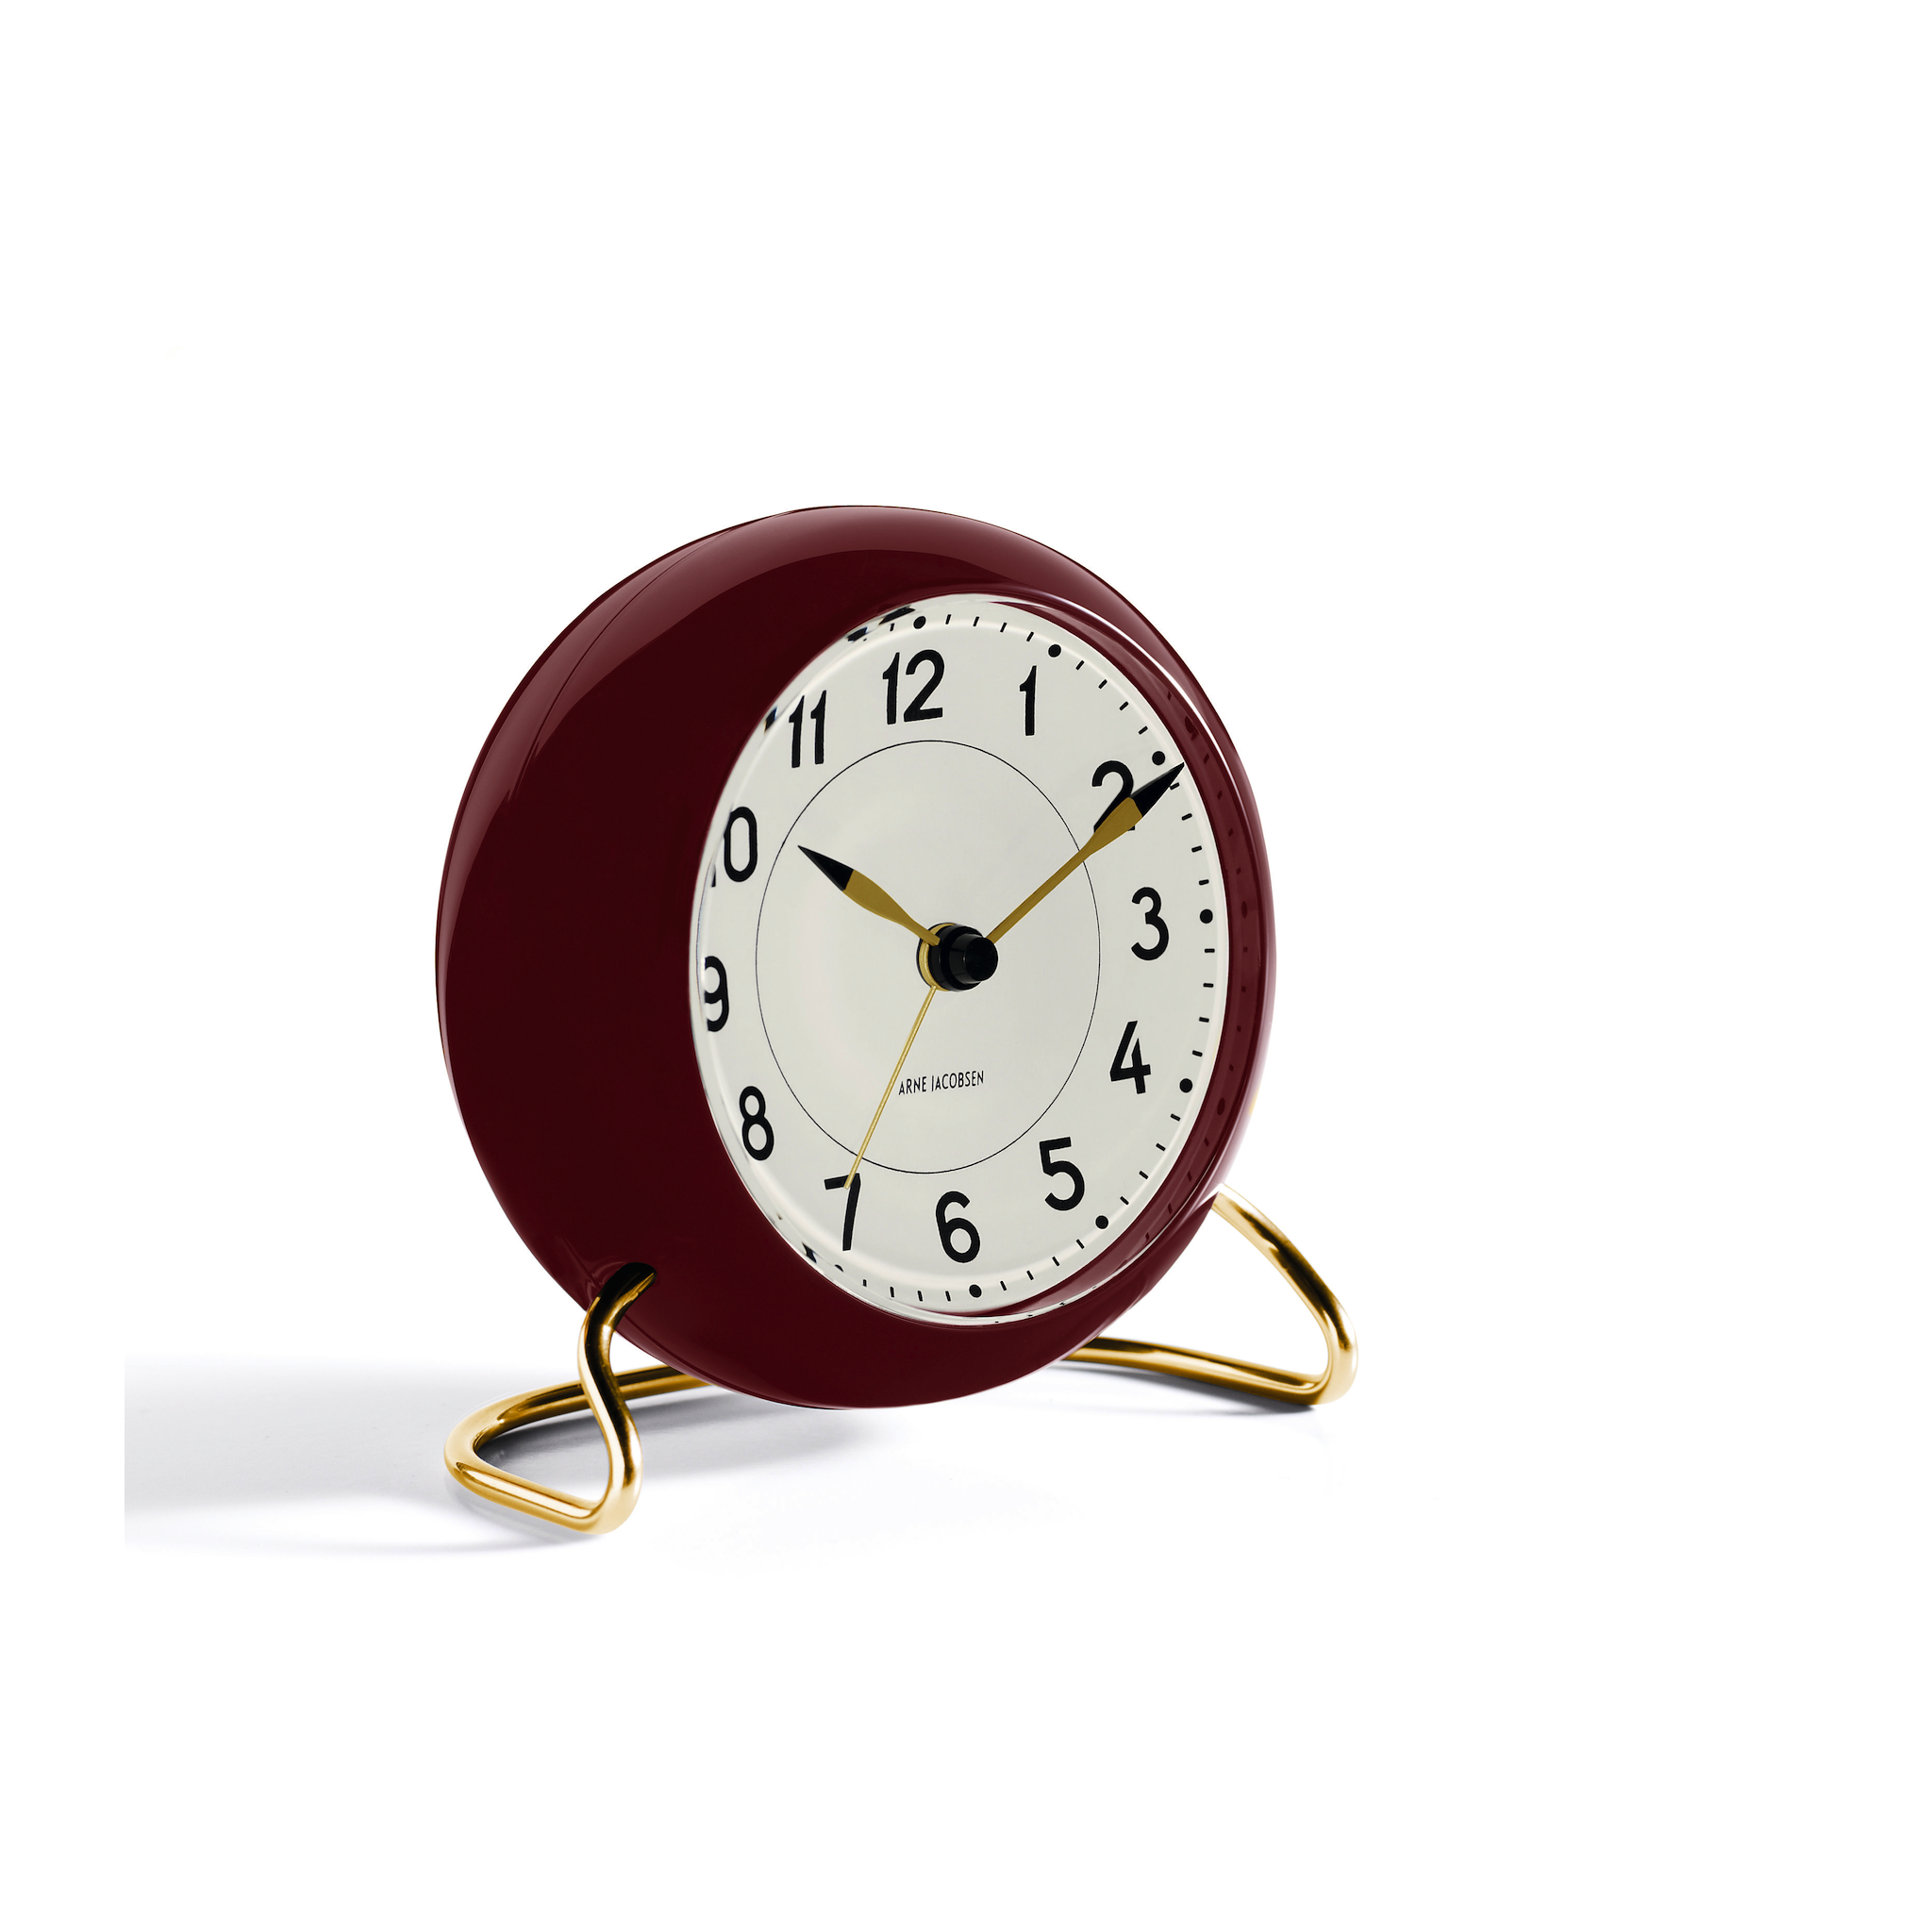 Arne Jacobsen Station Alarm Clock, Red